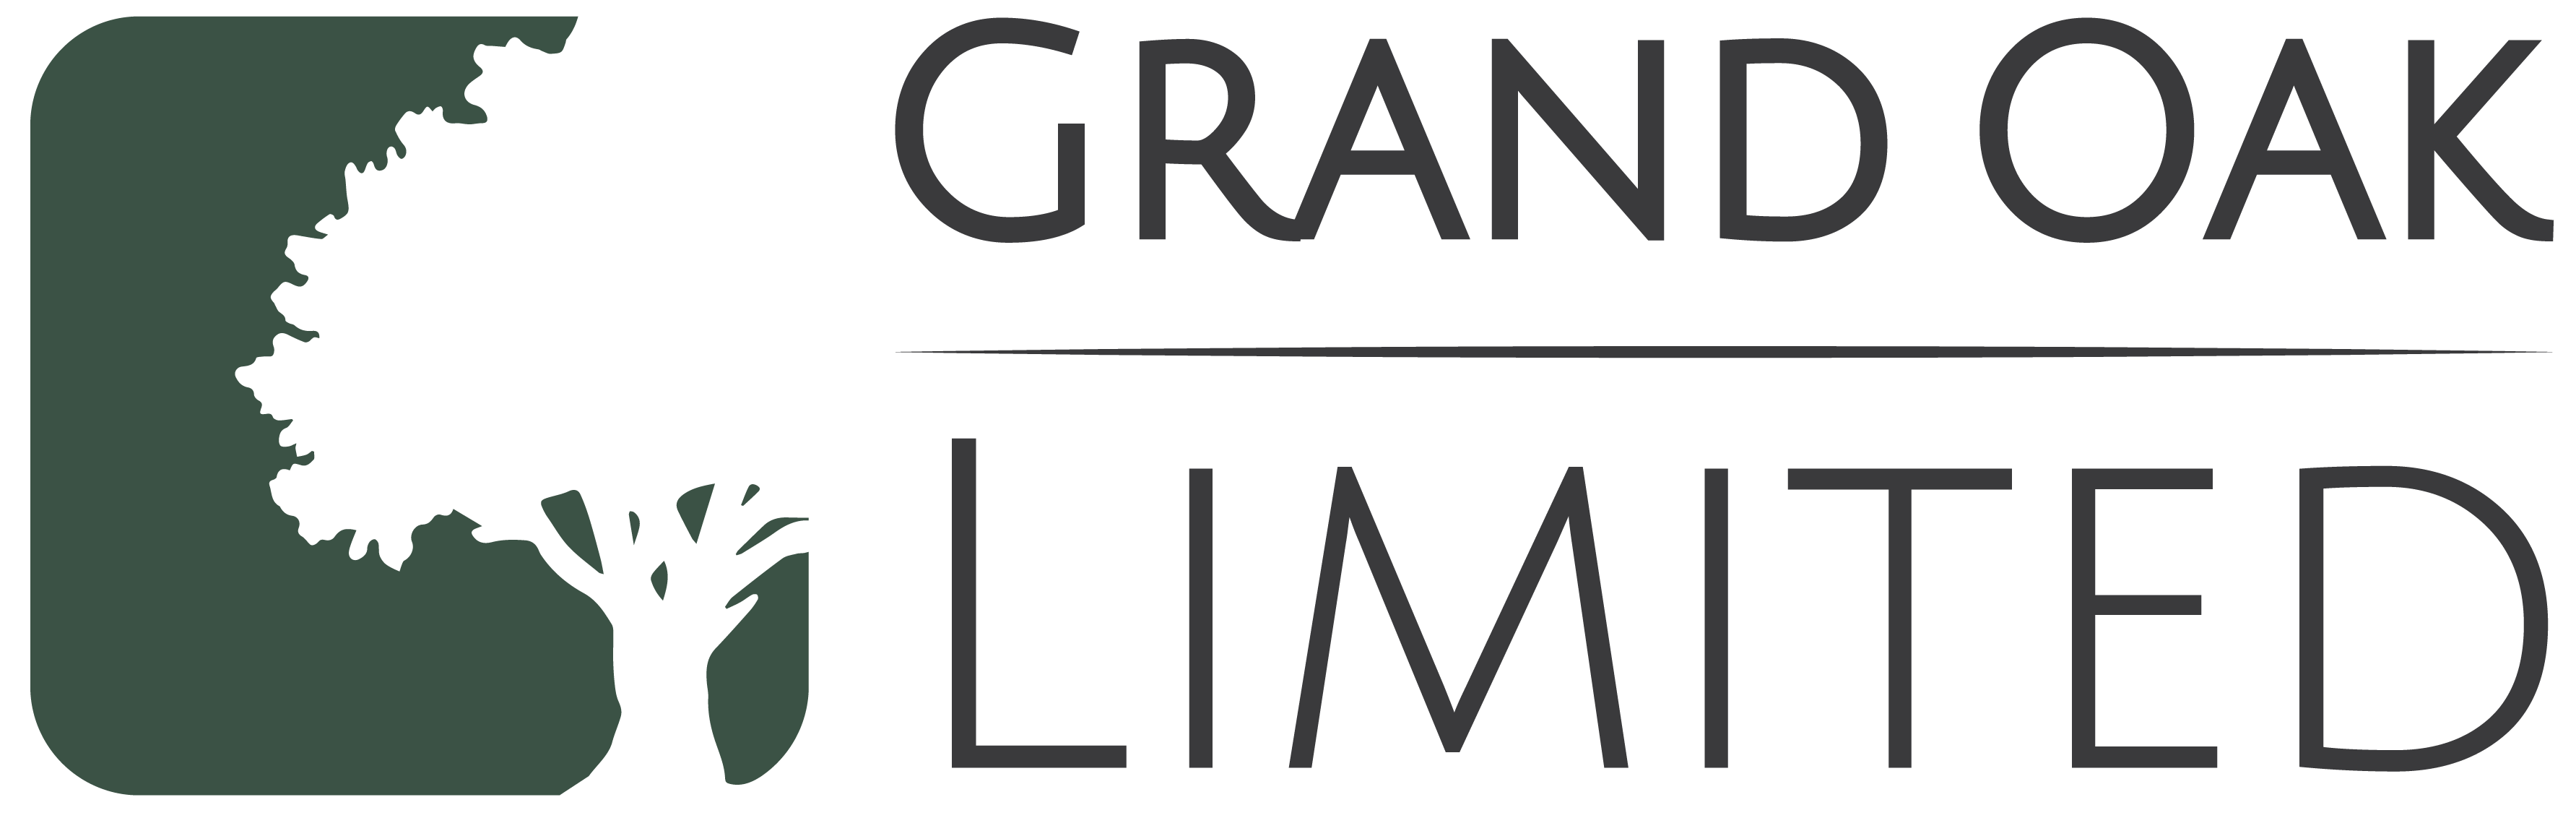 Grand Oak Limited Logo